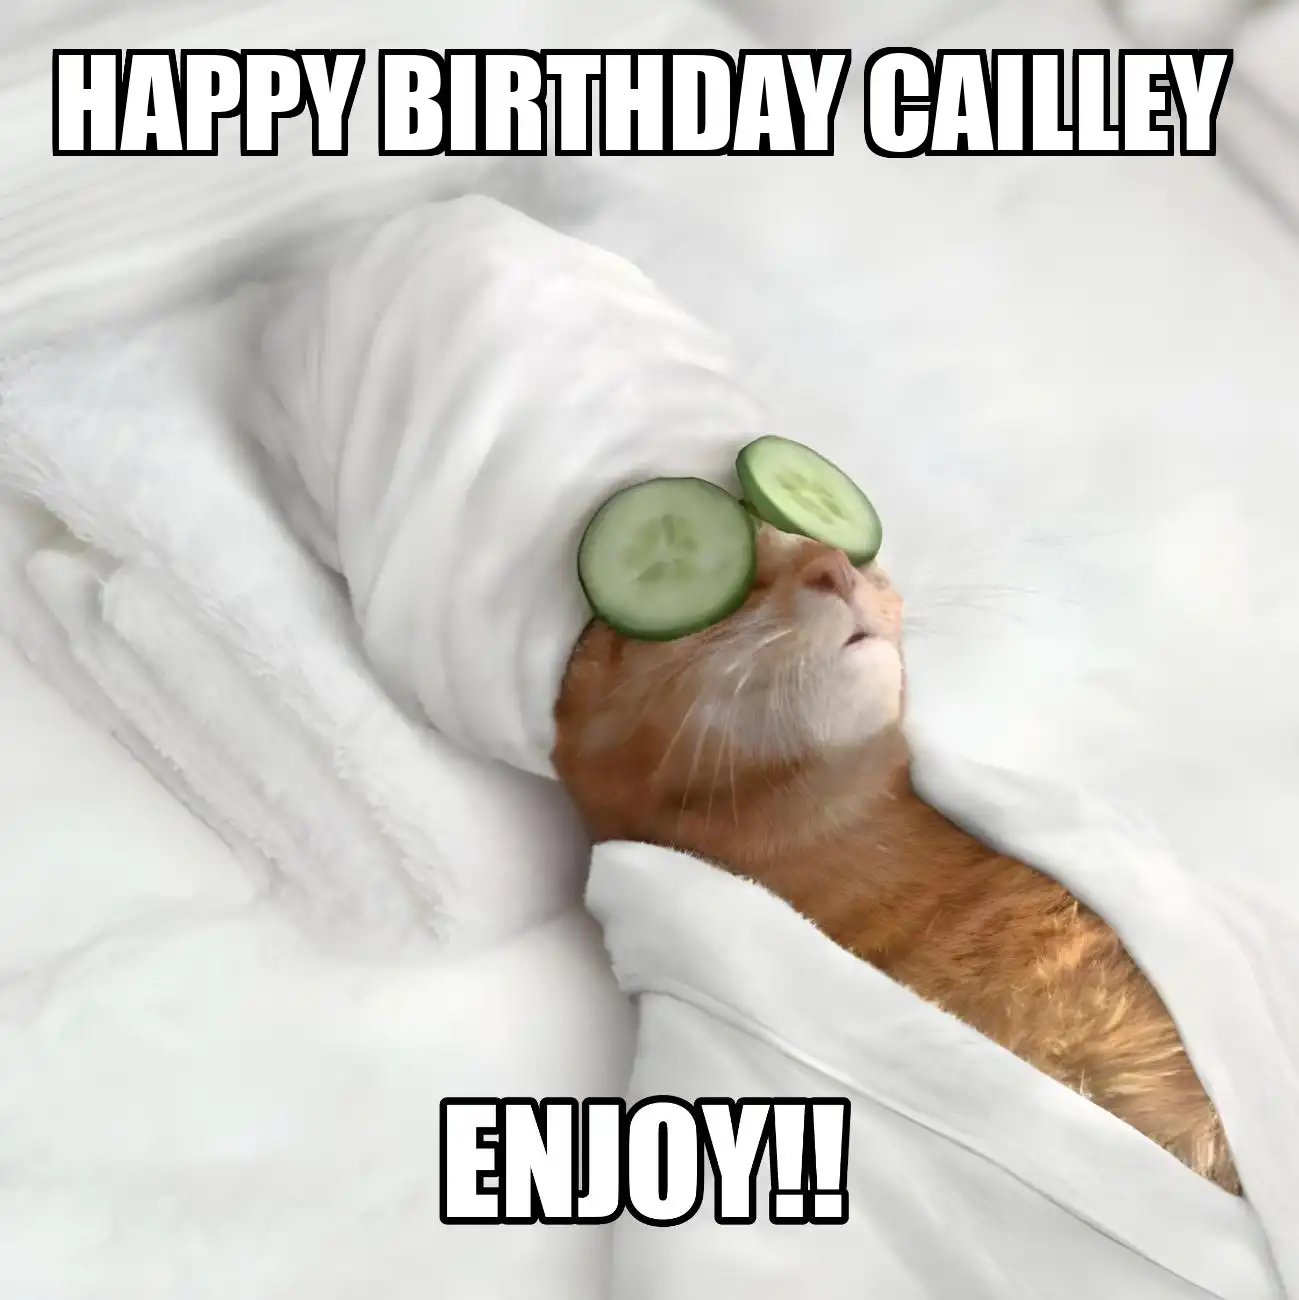 Happy Birthday Cailley Enjoy Cat Meme